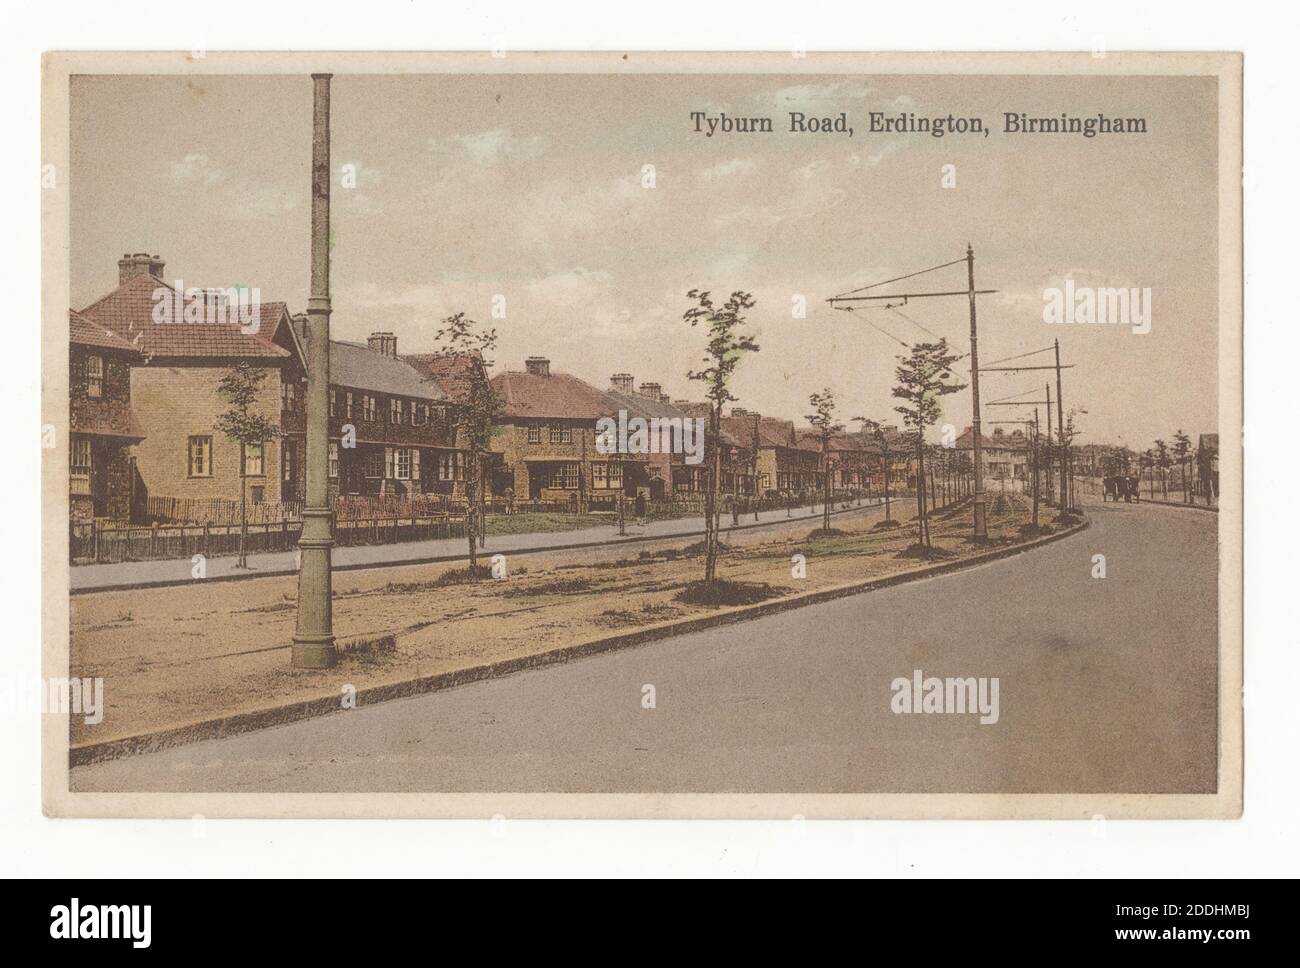 Postcard, Tyburn Road, Erdington, Birmingham, 1930-40 Topographical Views, Topographical Views, Suburban, Birmingham history, Road, Postcard Stock Photo